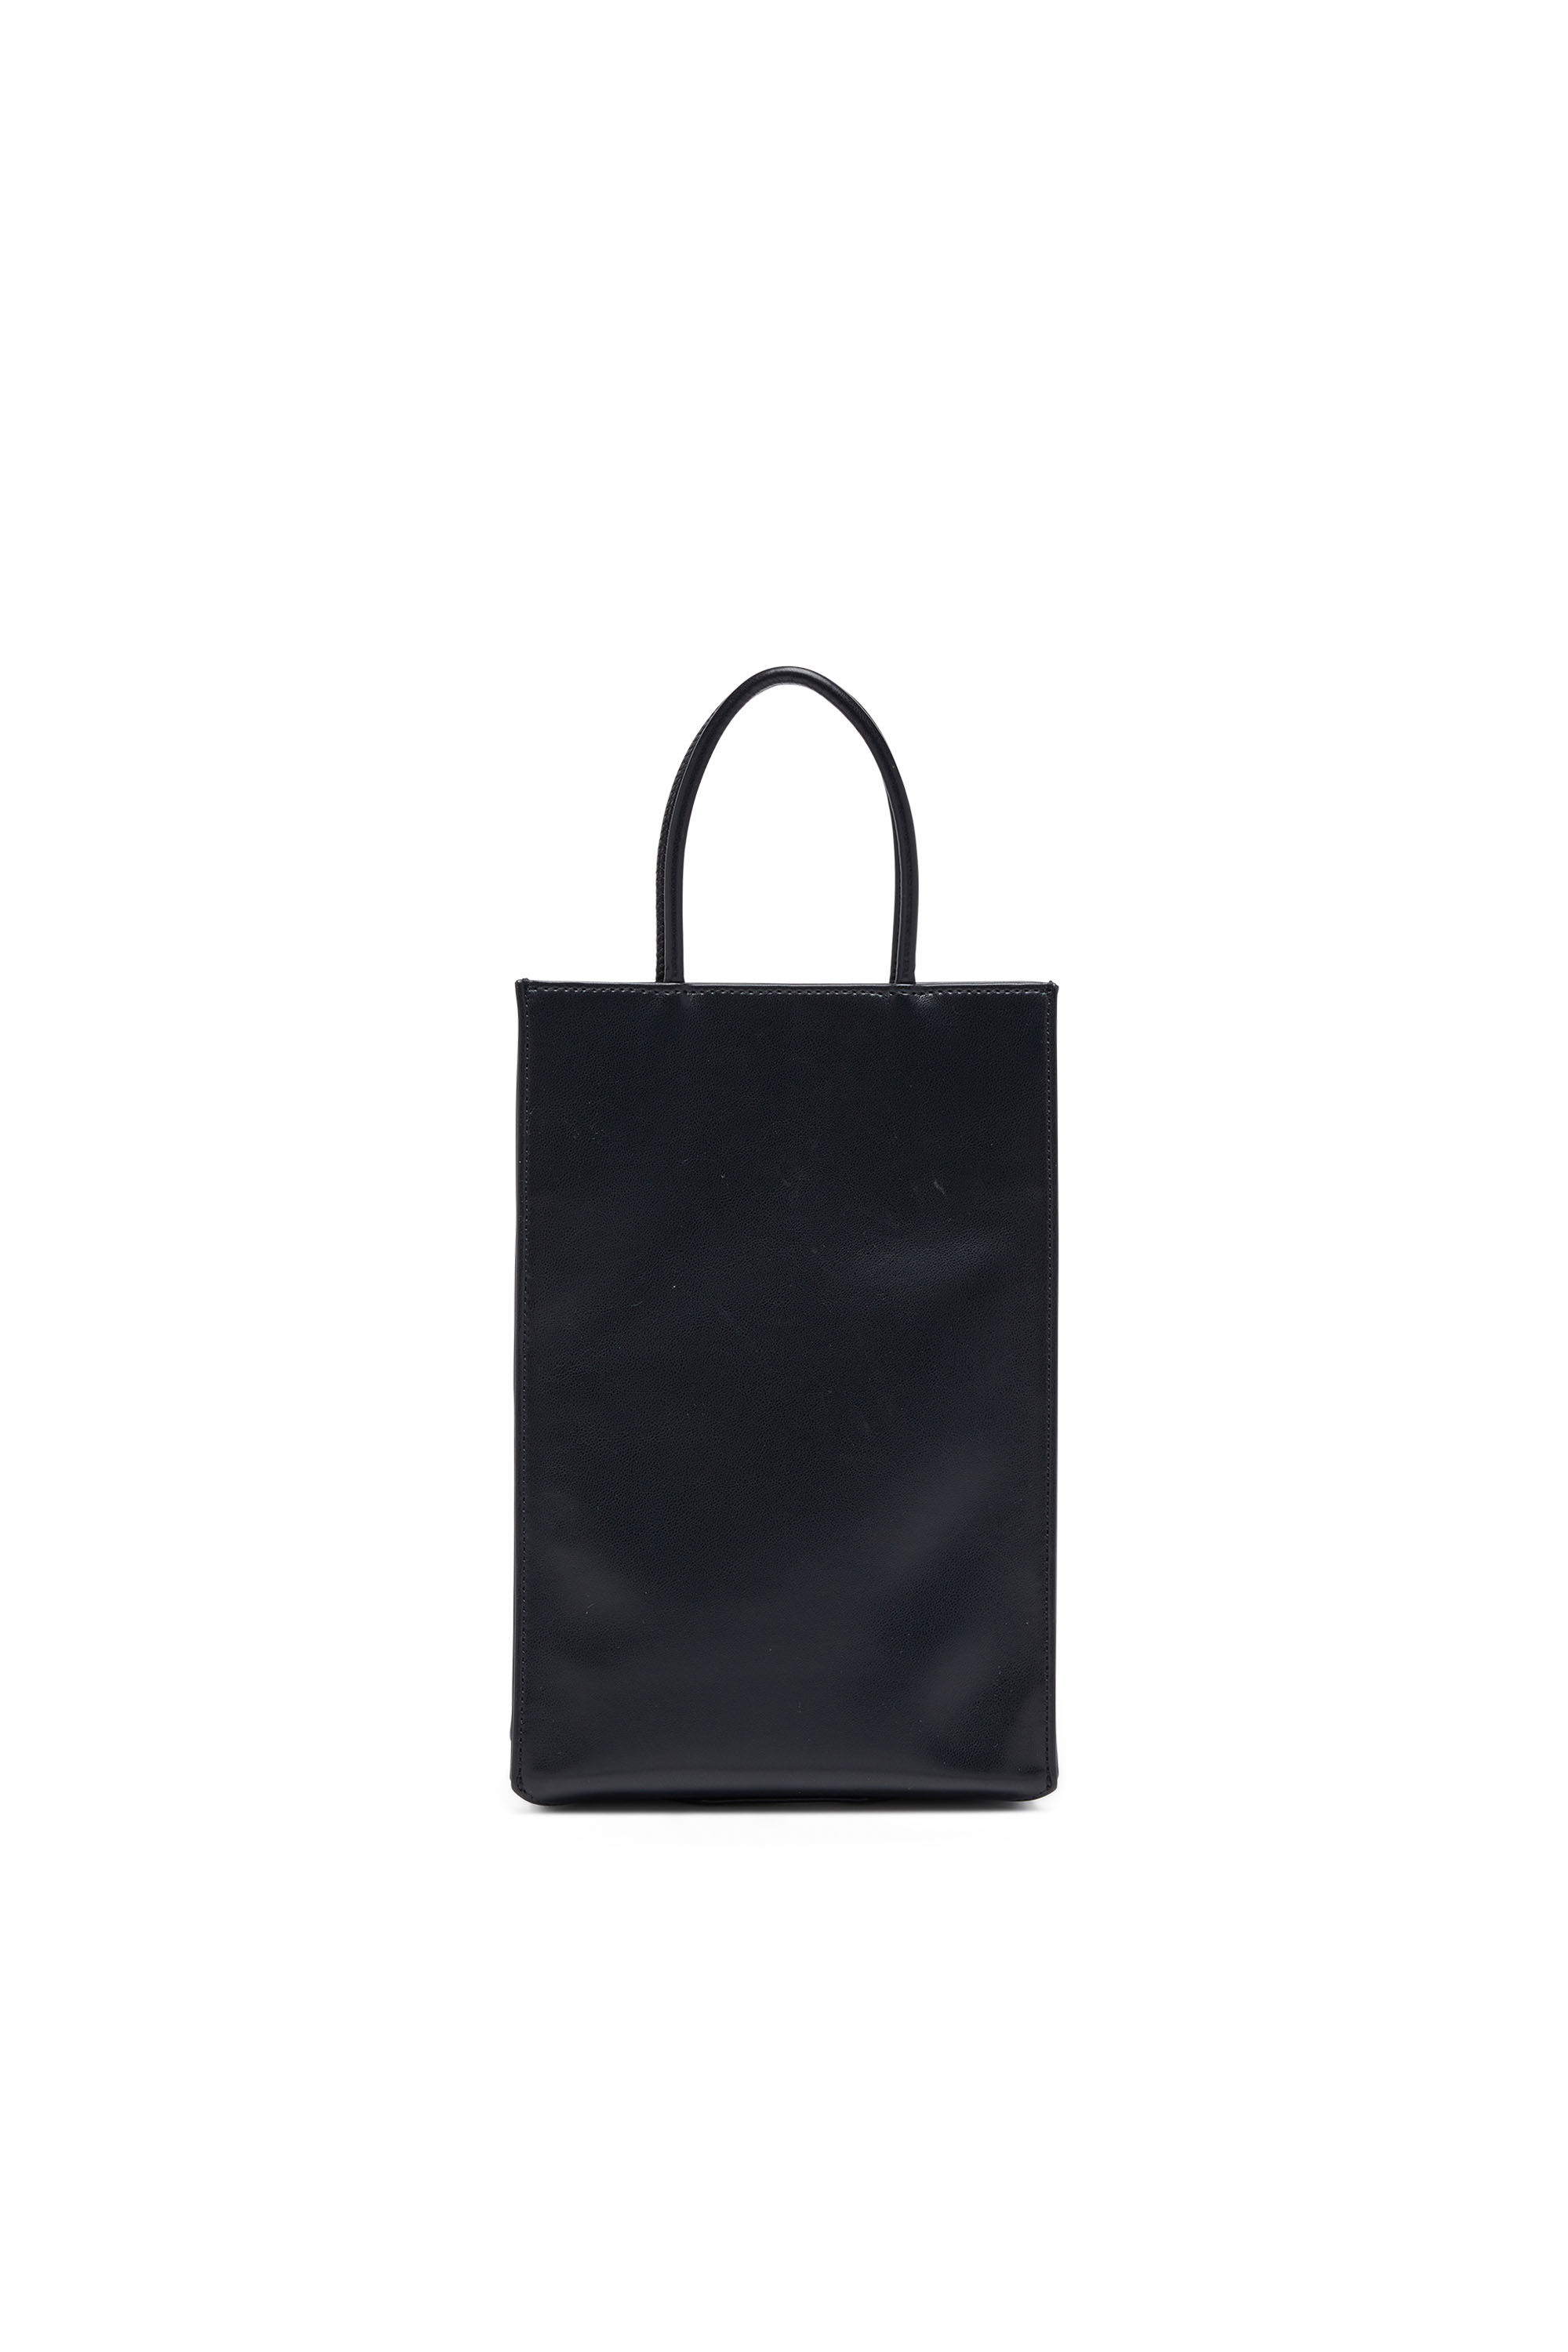 Diesel - DSL 3D SHOPPER M X, Unisex Dsl 3D M-PU tote bag with embossed logo in Black - Image 3